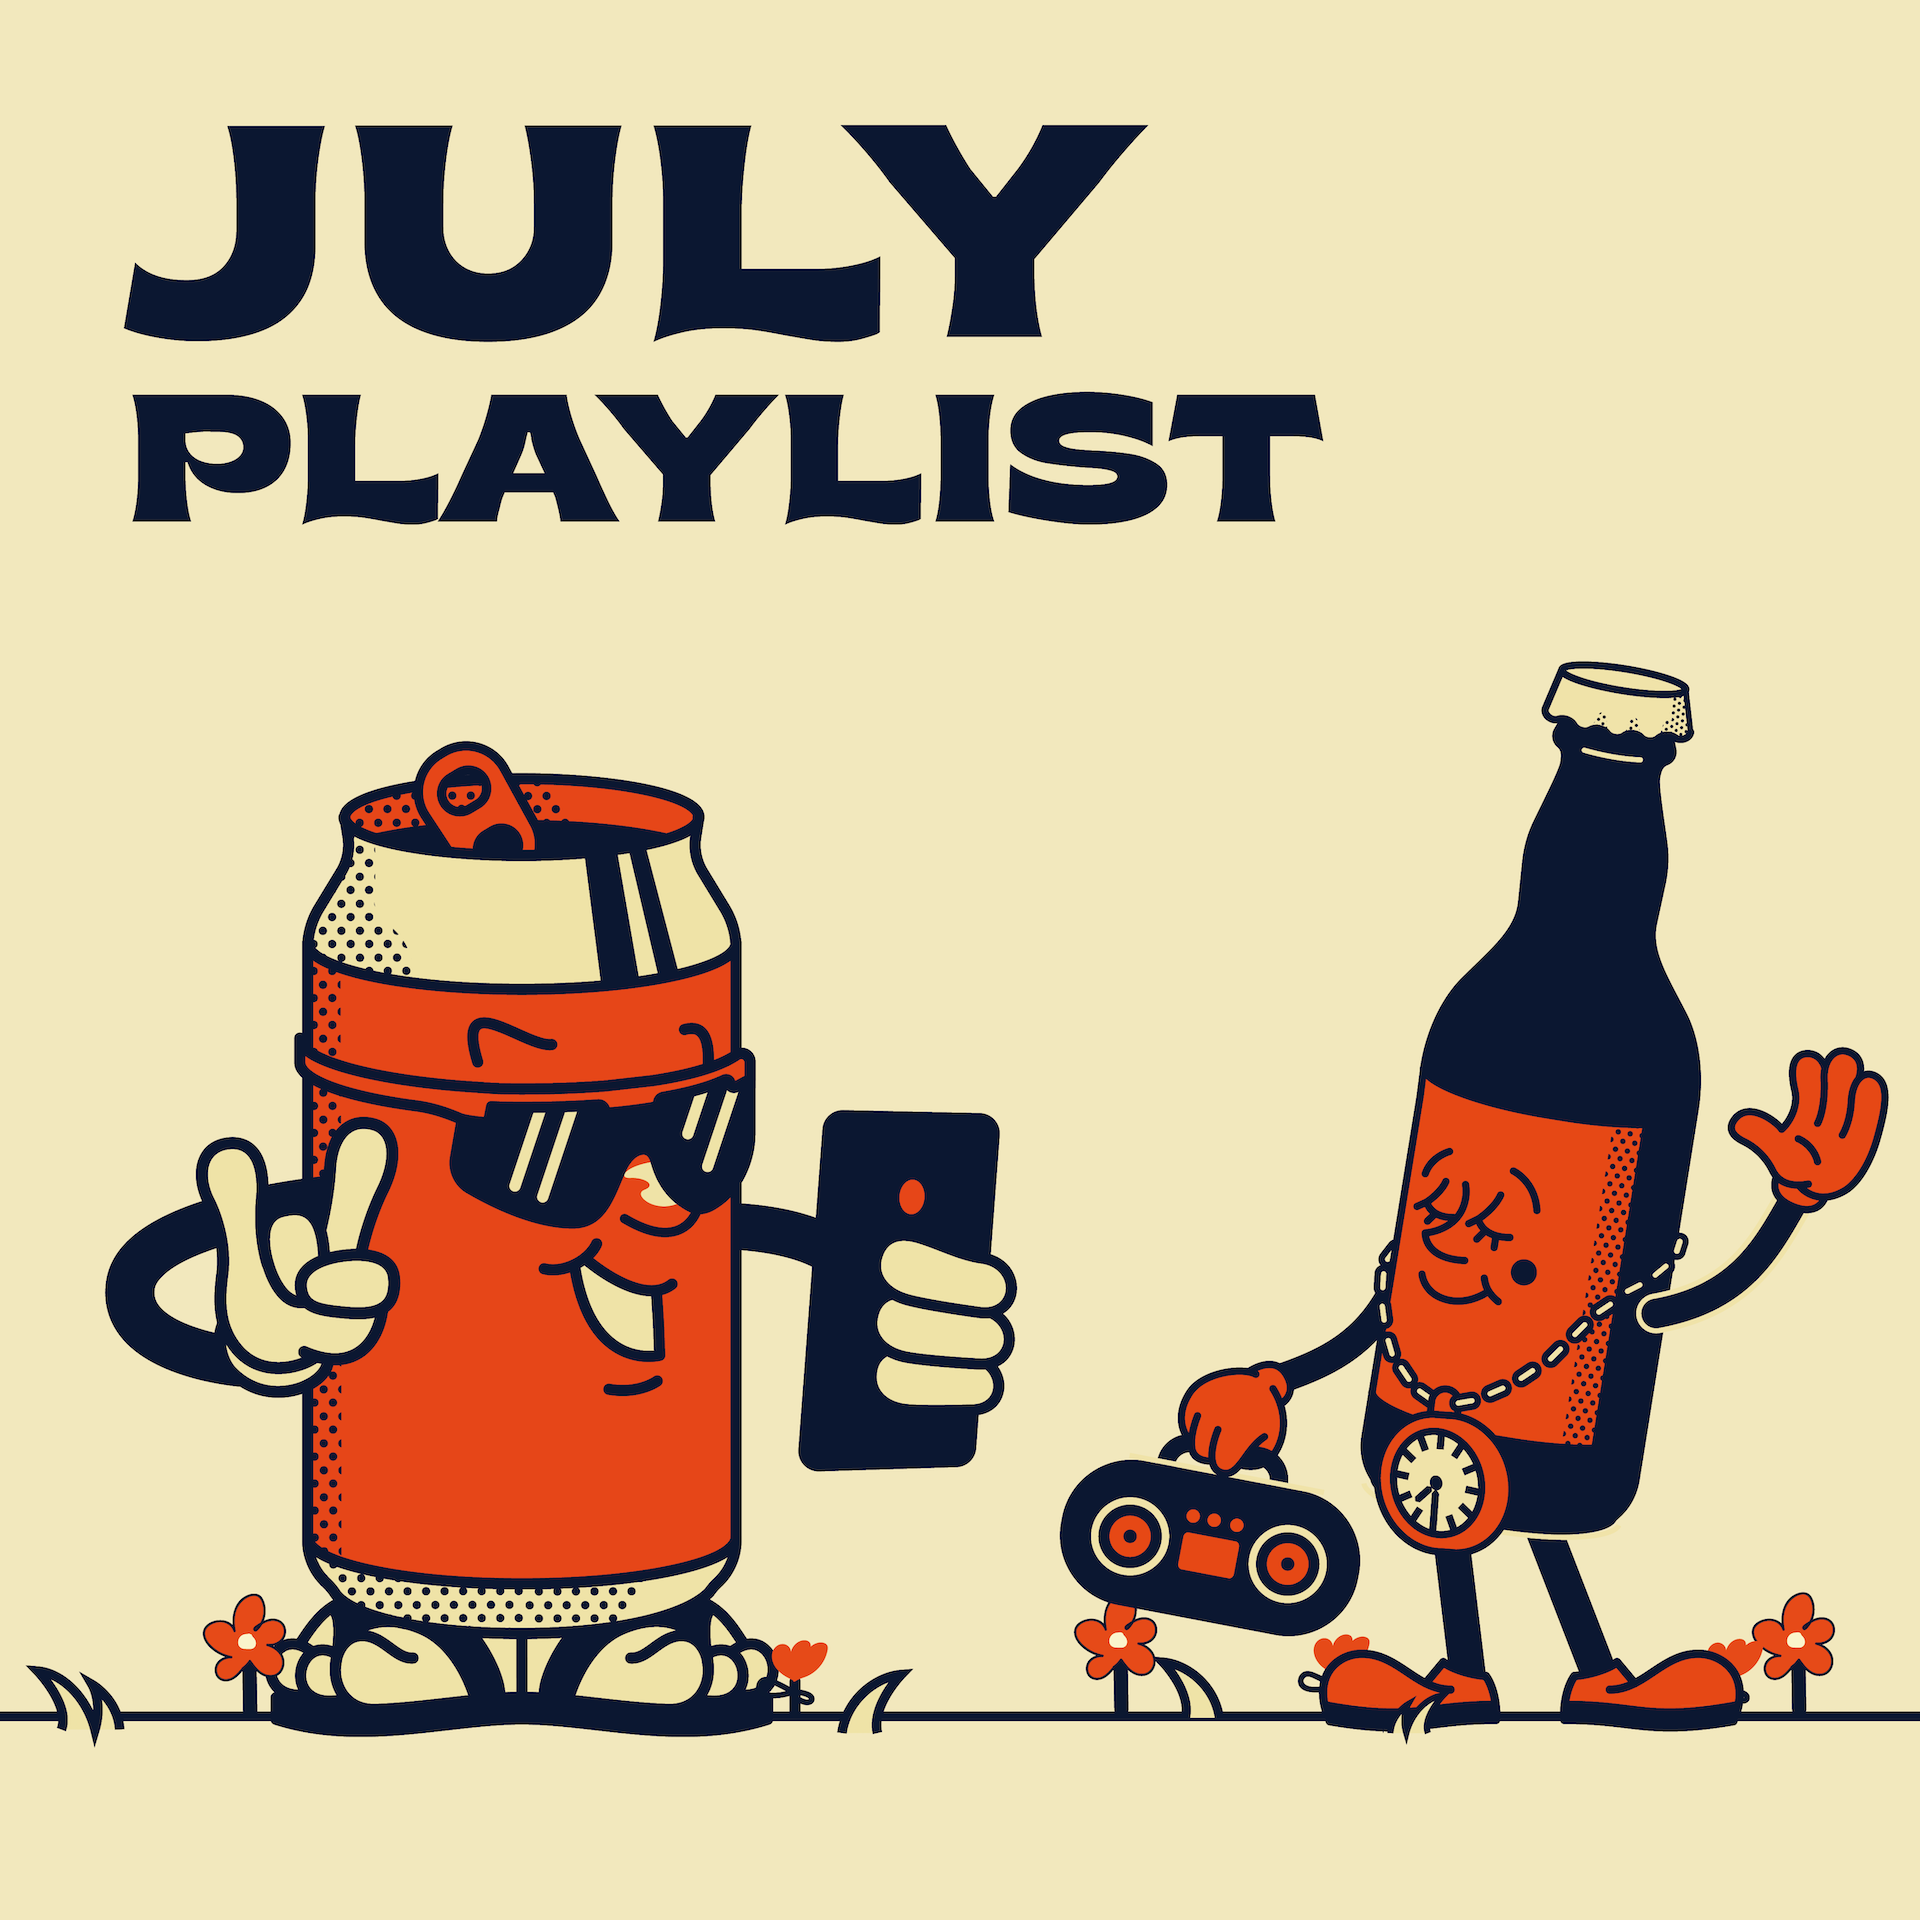 July Playlist